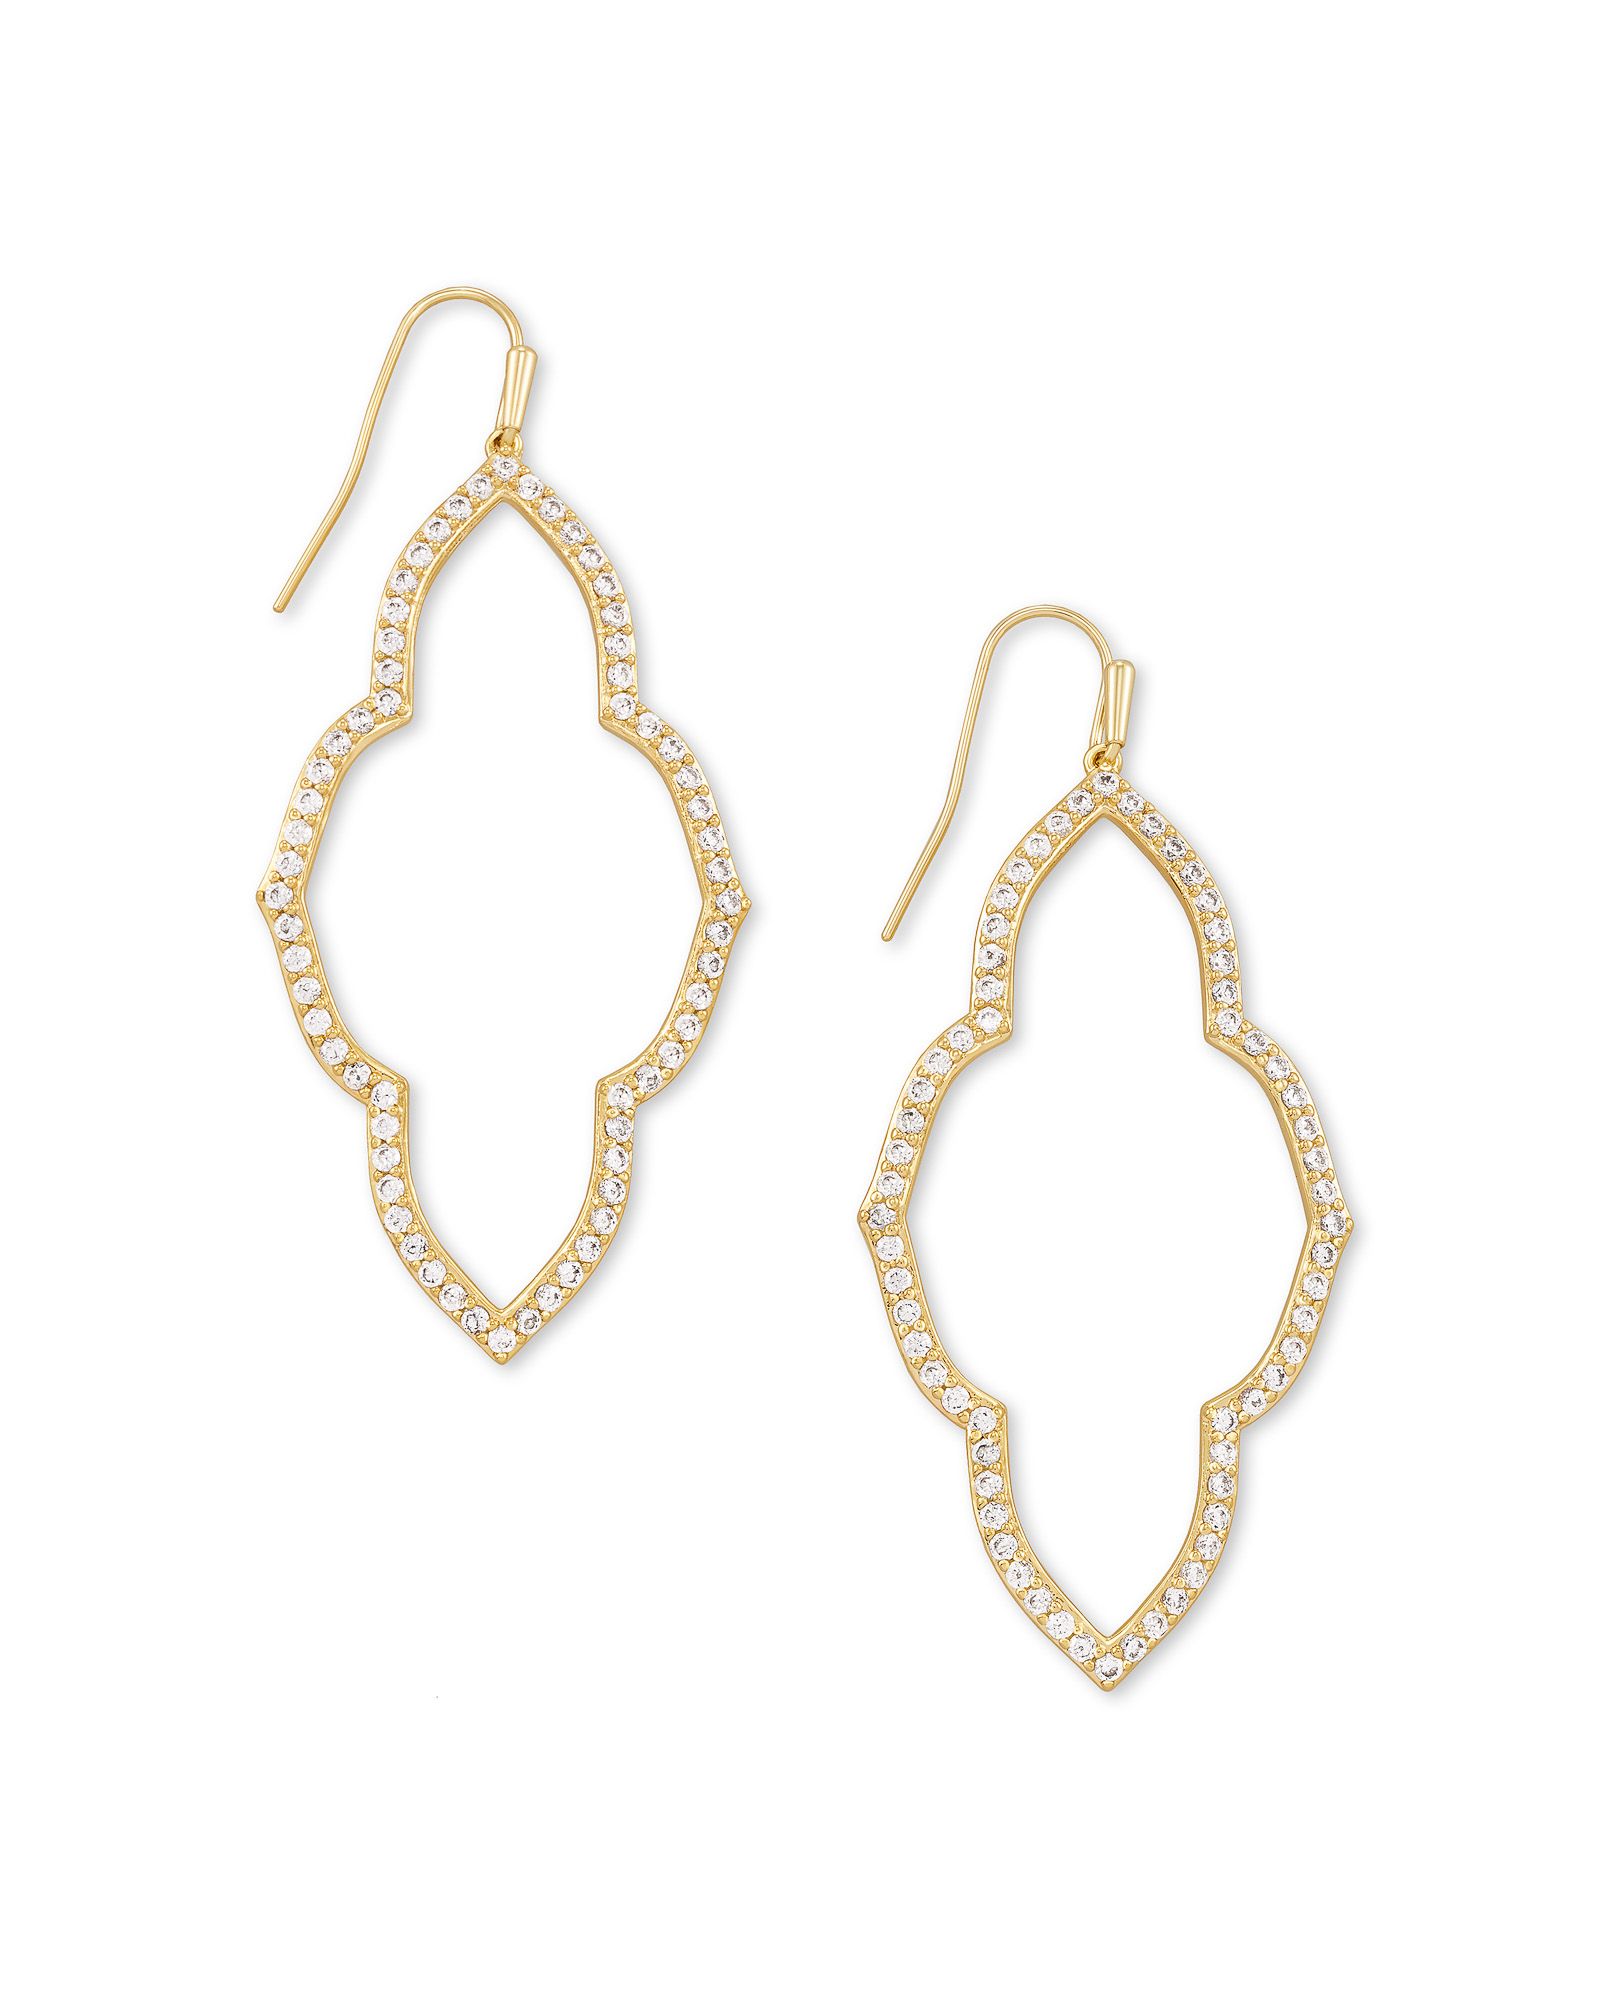 Abbie Gold Open Frame Earrings in White Crystal | Kendra Scott